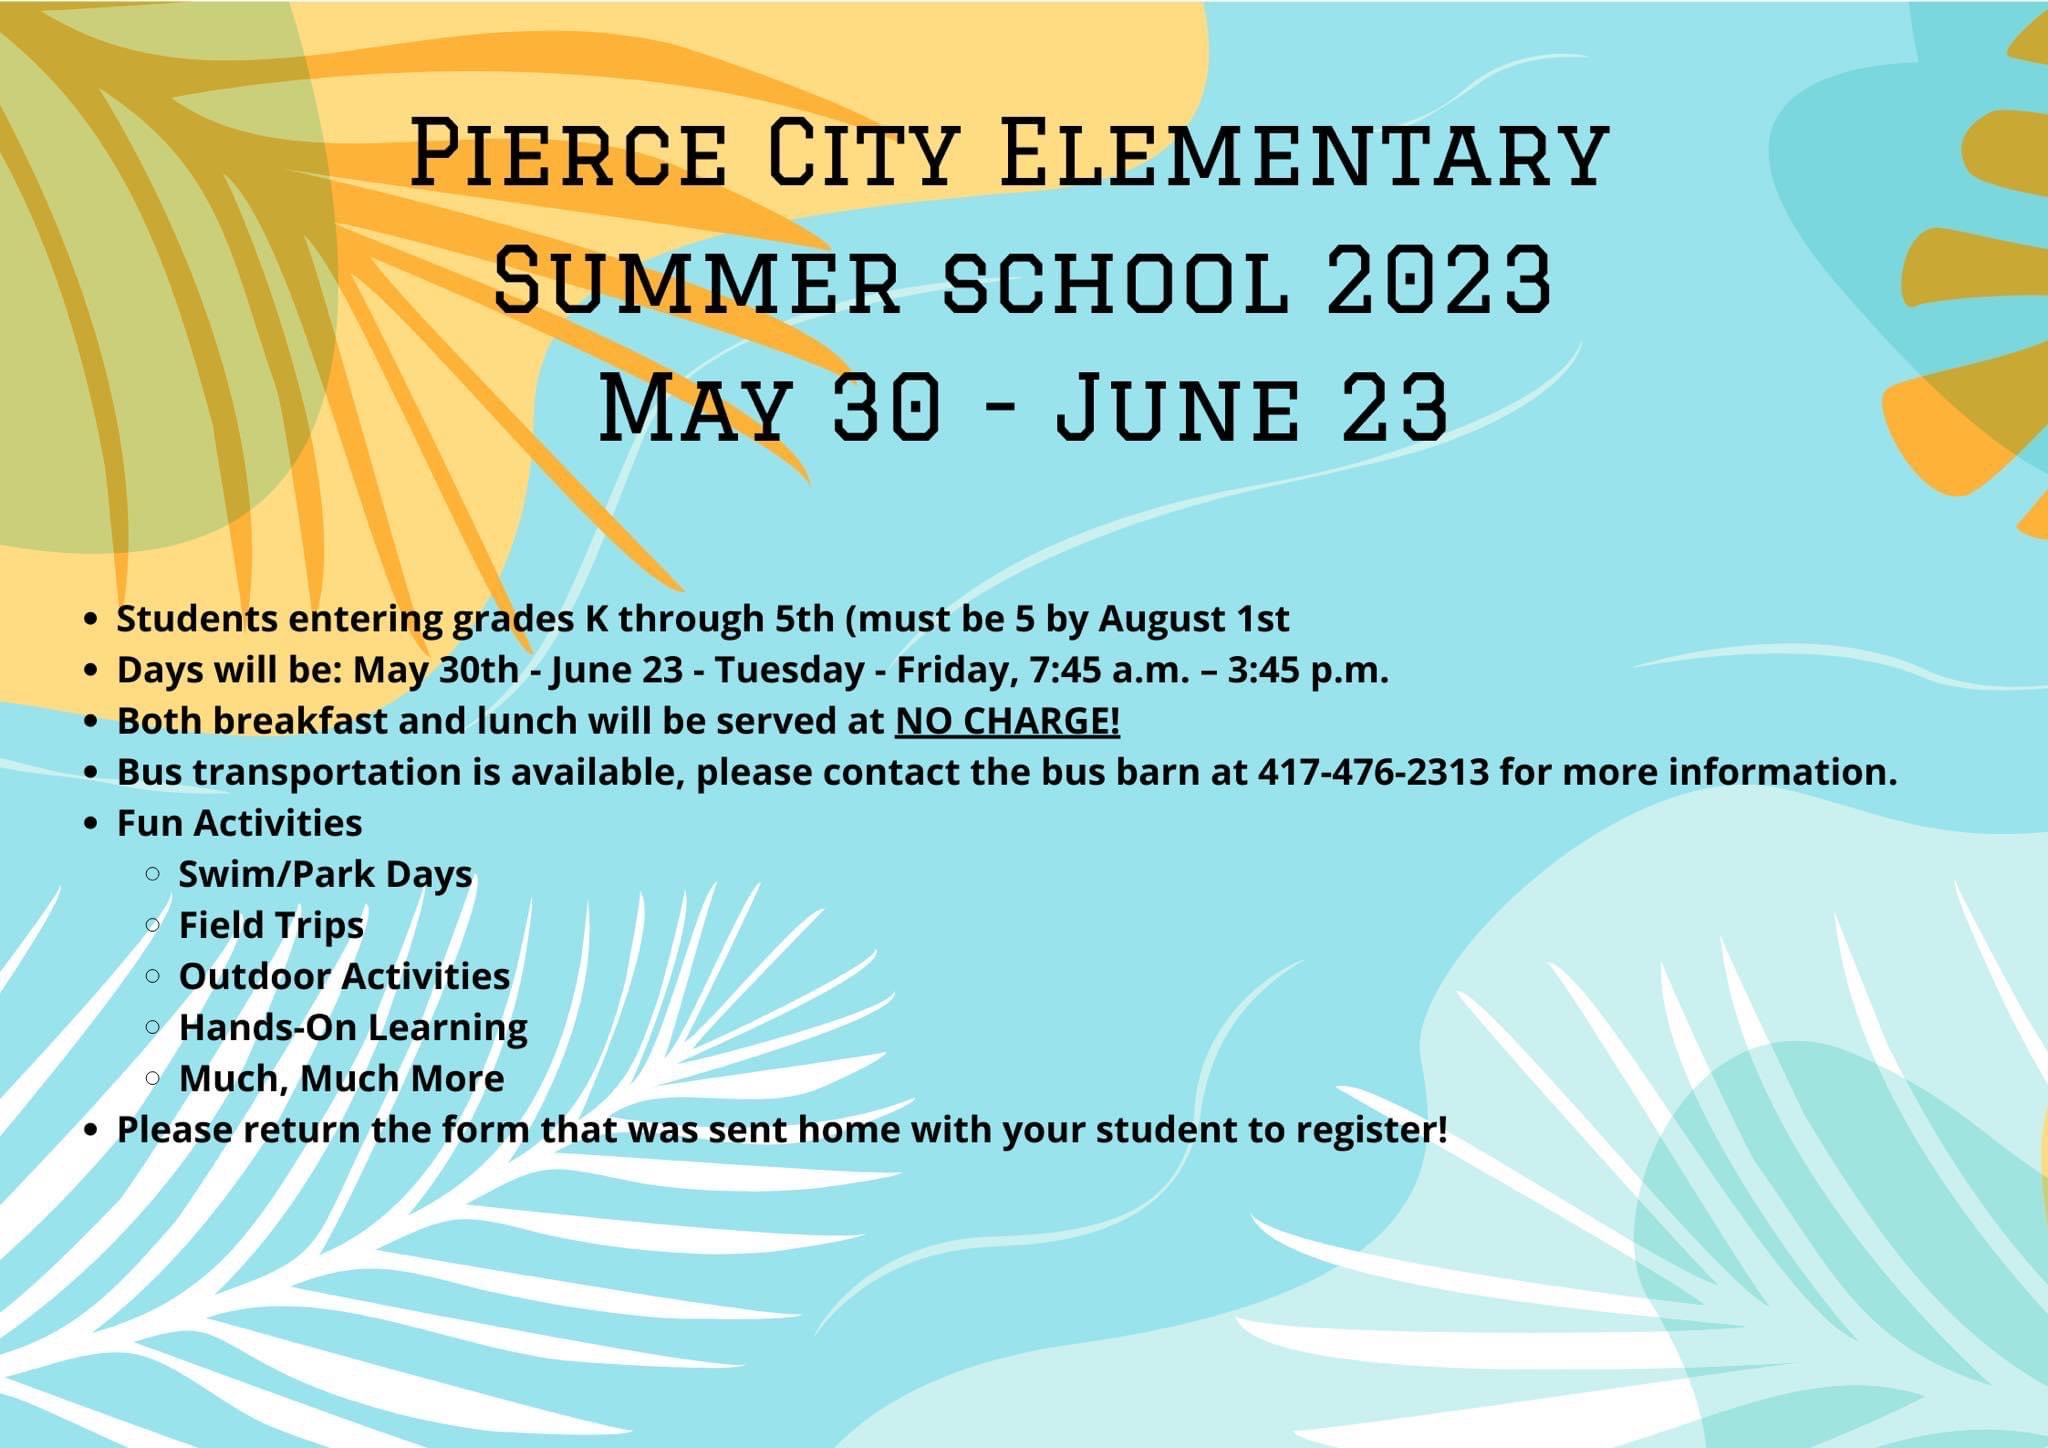 Elementary Summer School flyer.  May 30-June 23